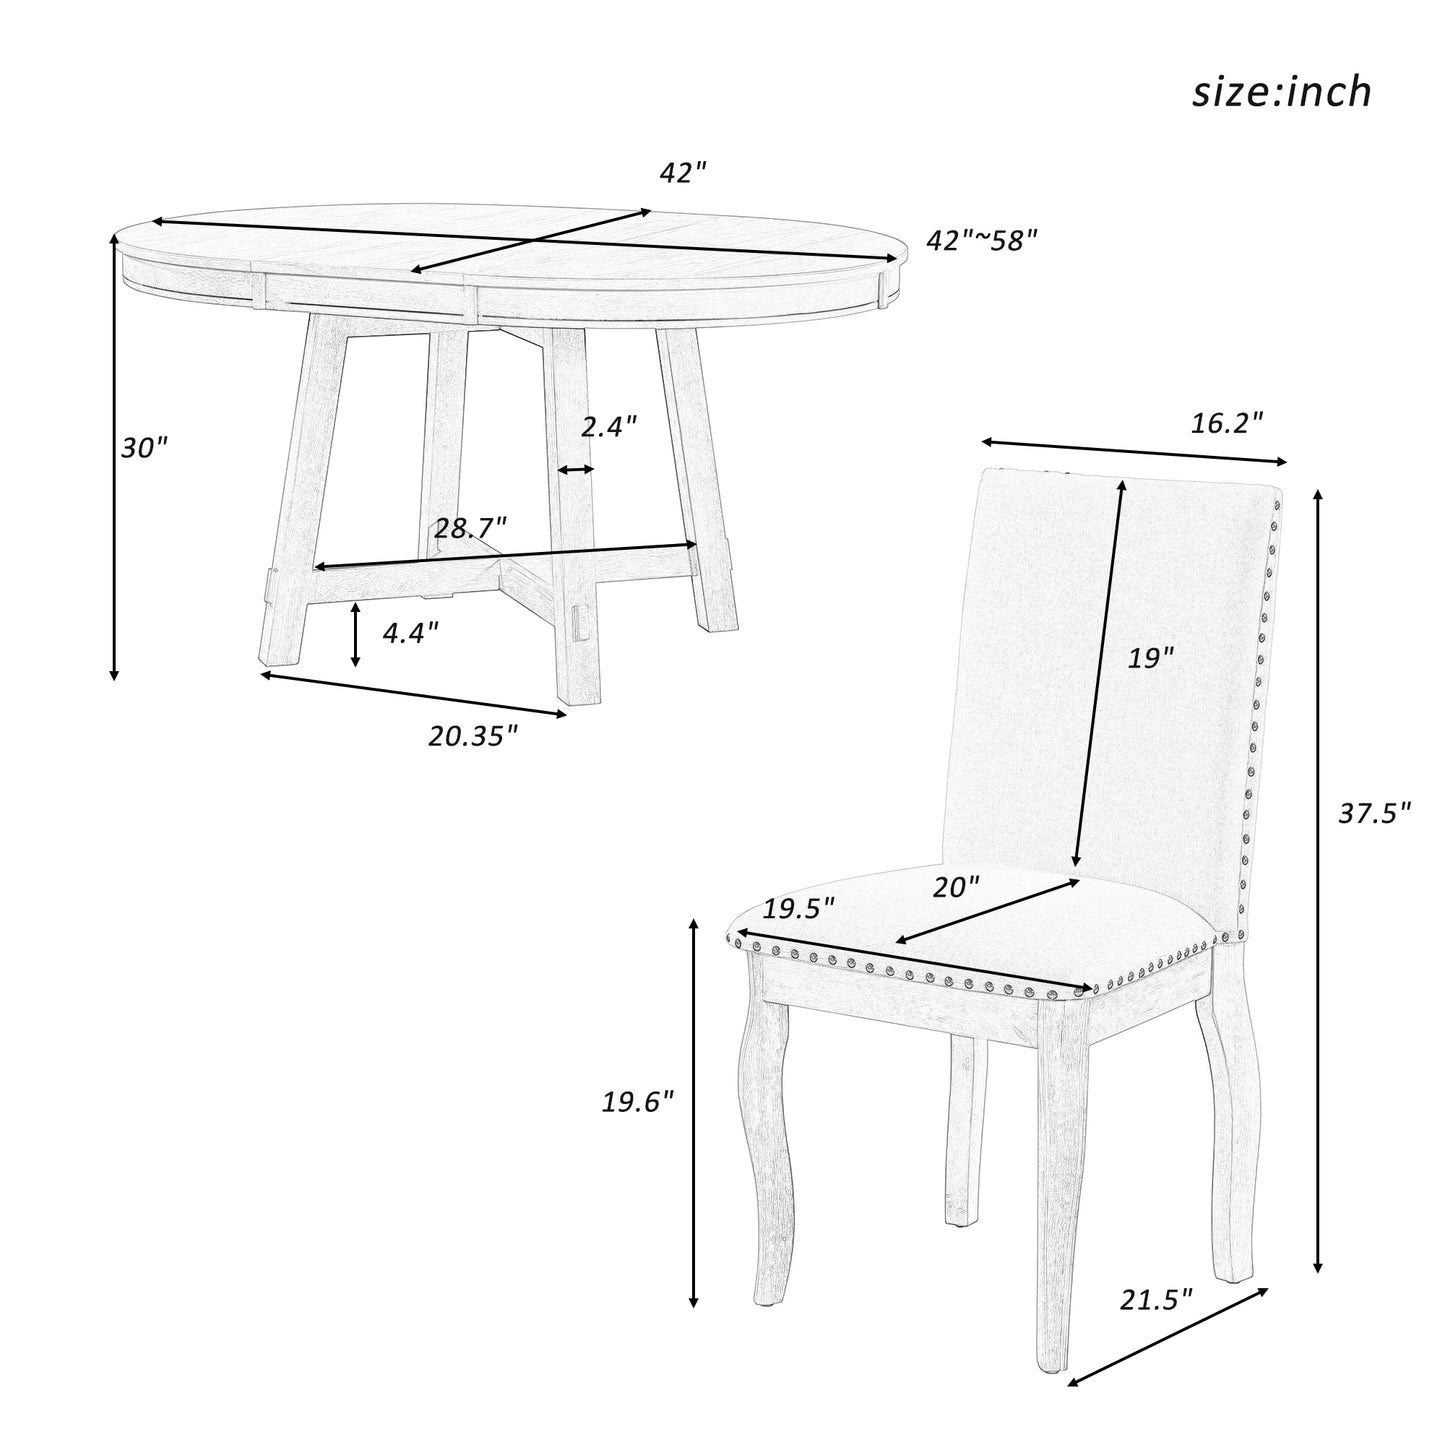 5-Piece Farmhouse Dining Table Set Wood Round Extendable Dining Table and 4 Upholstered Dining Chairs (Espresso)